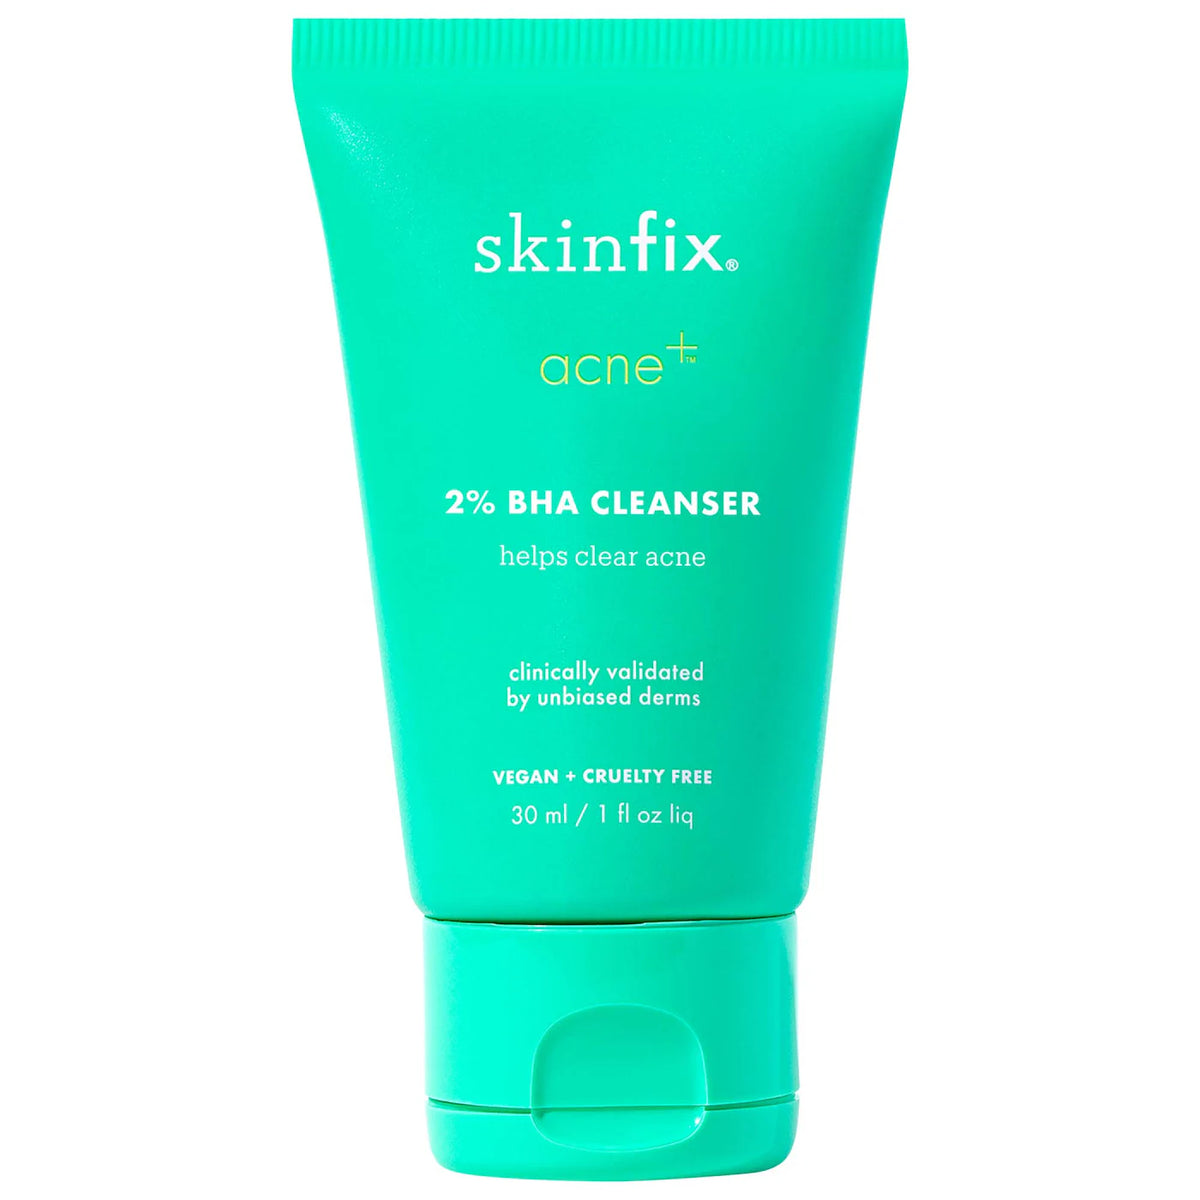 Skinfix Acne+ 2% BHA + Azelaic Acid + Niacinamide + AHA Cleanser cleanser Volare Makeup Mini size 30 ml  